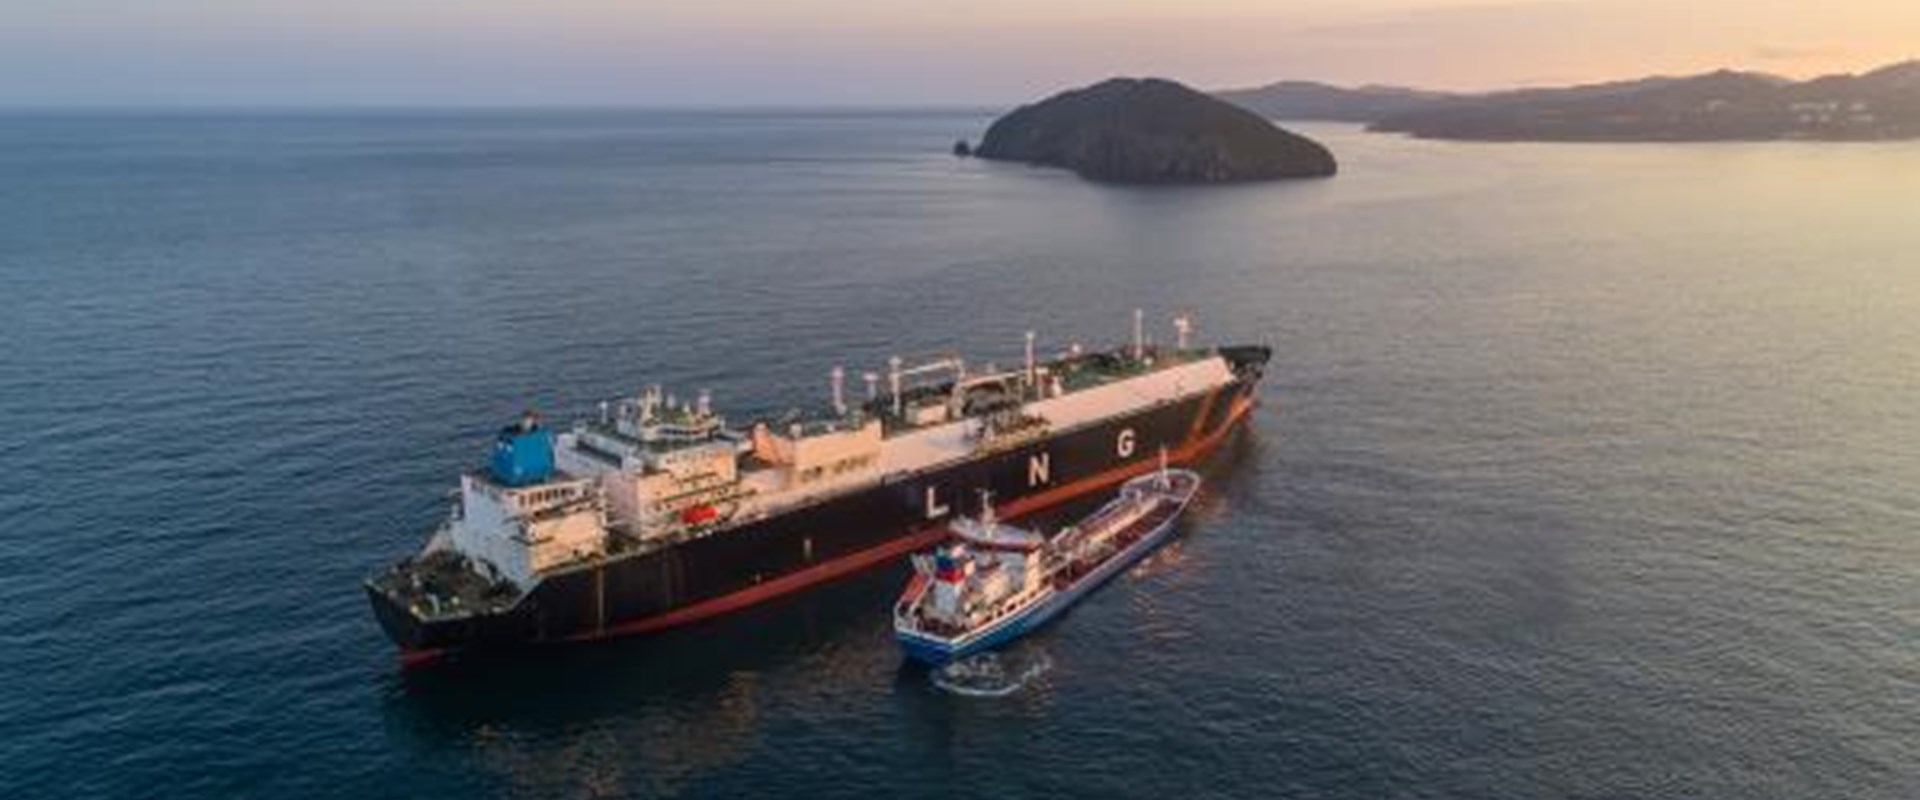 Surveys 3 - LNG tanker near island